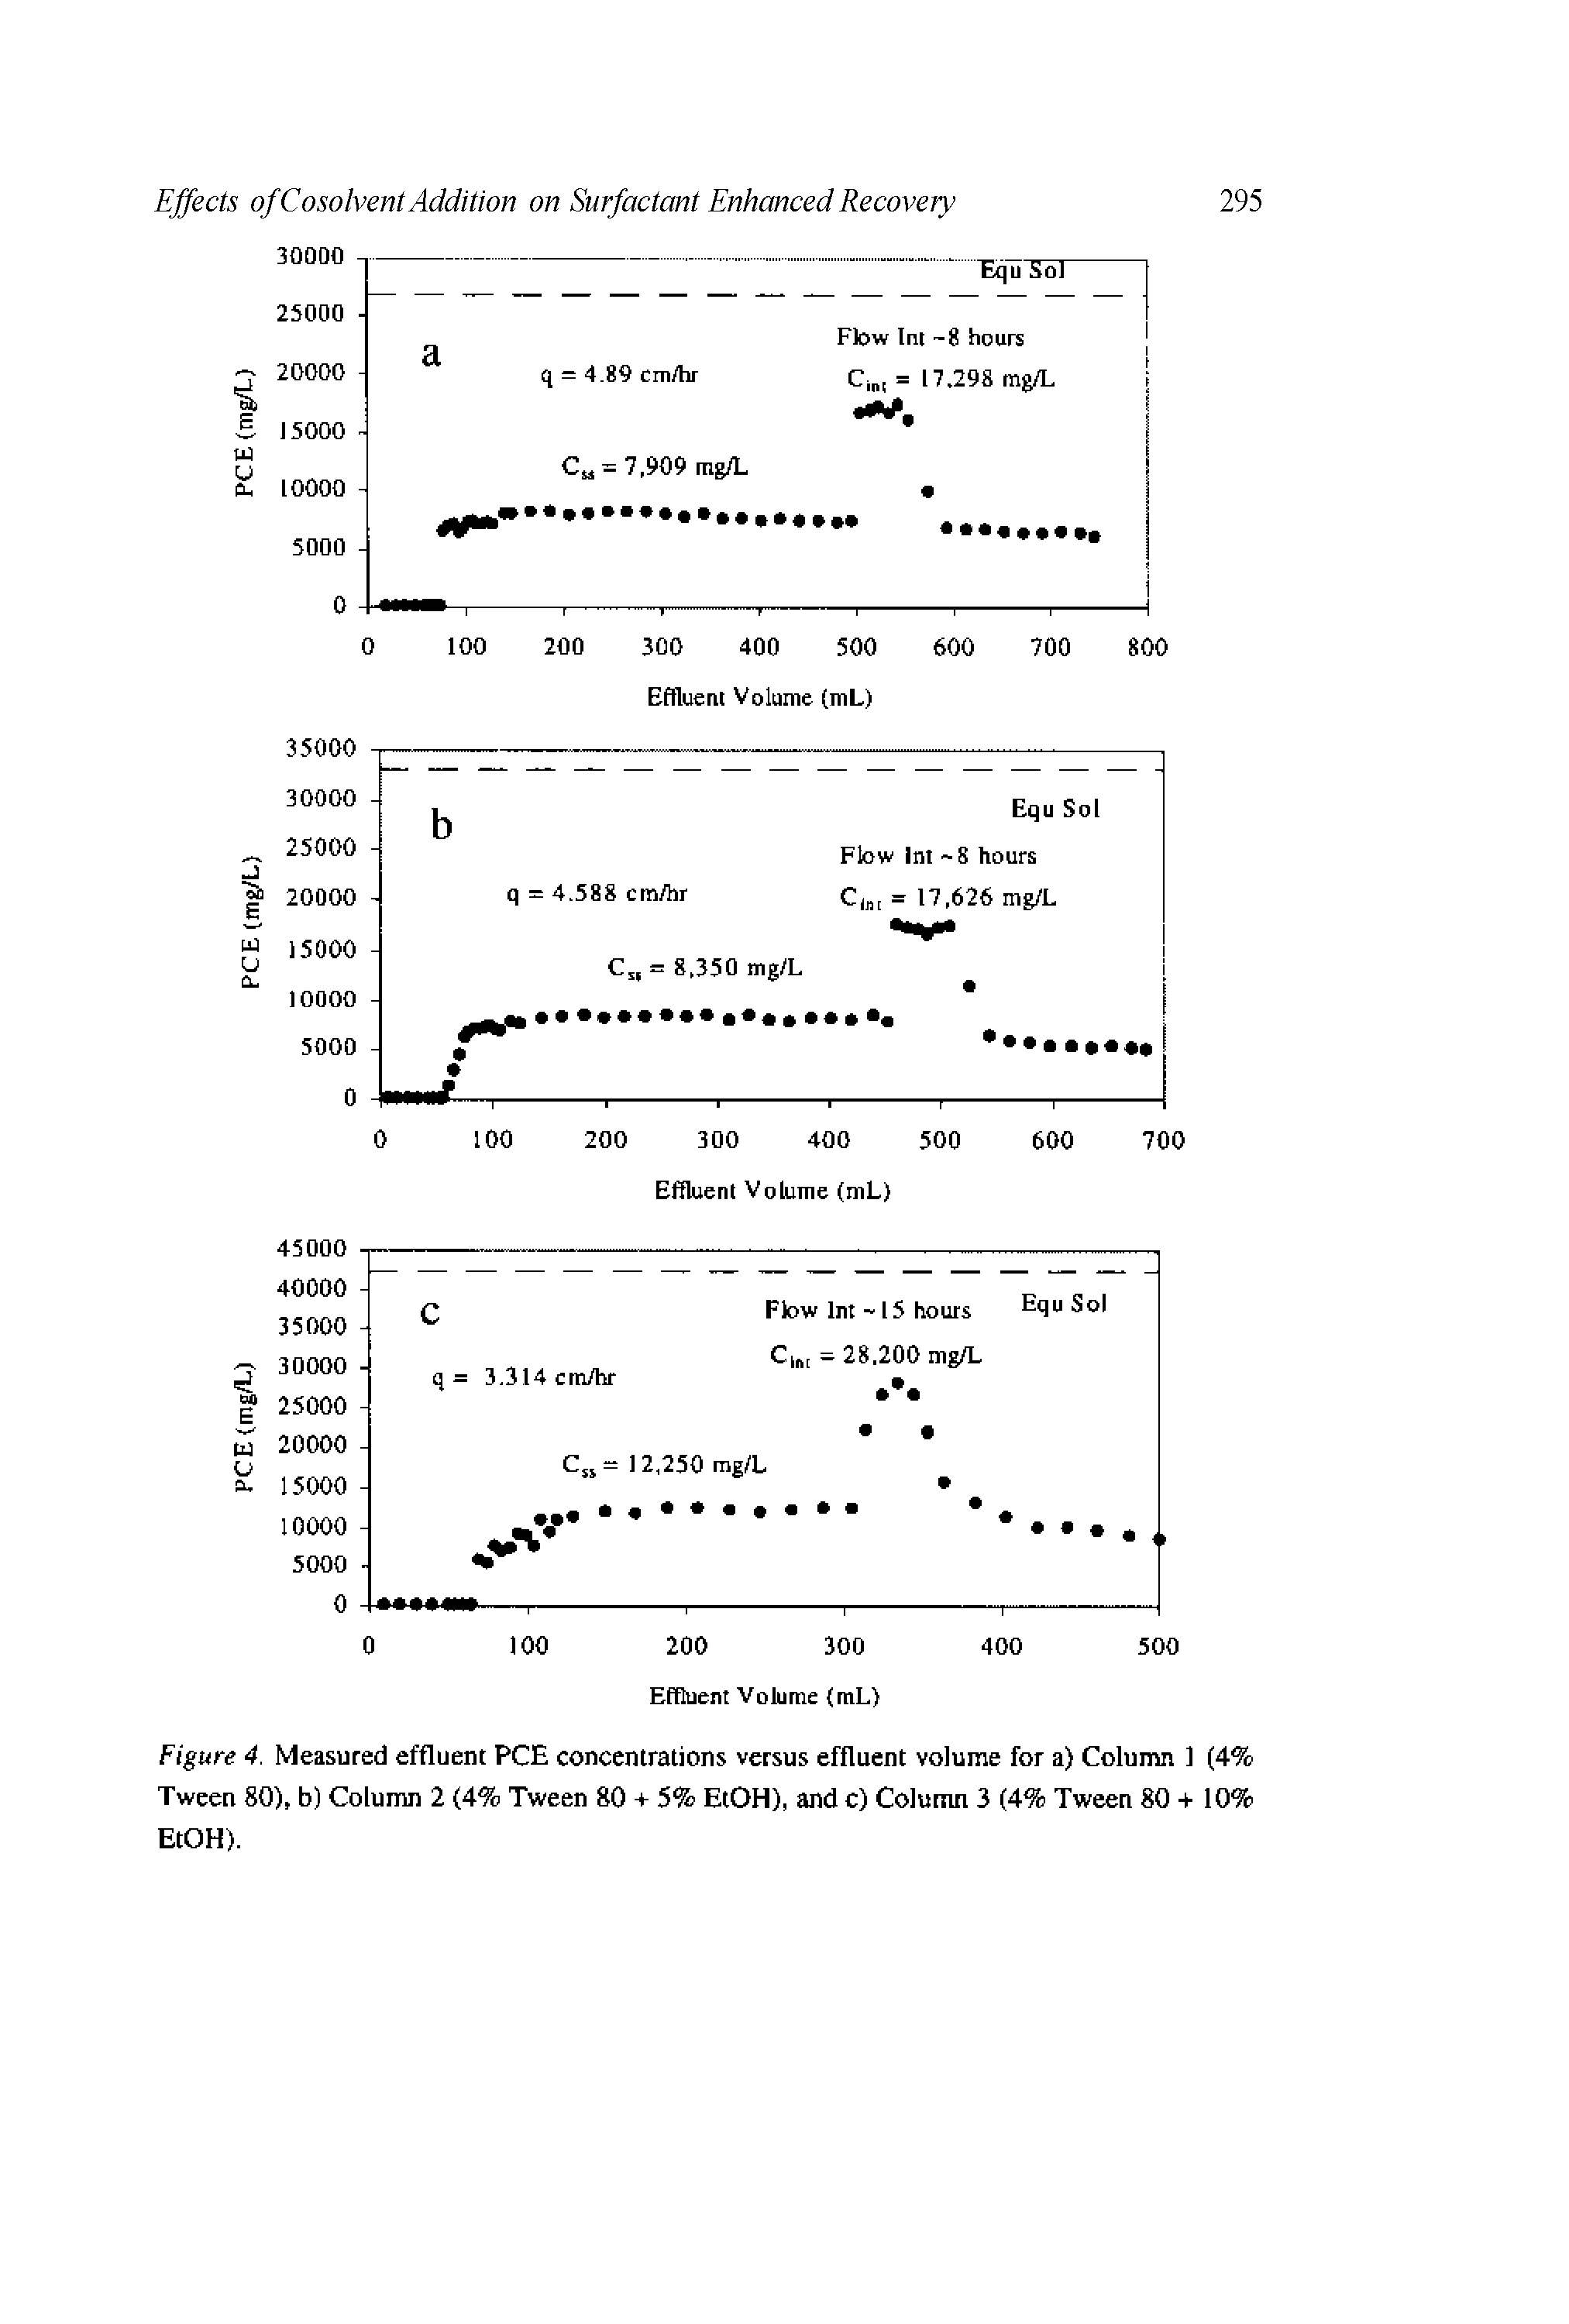 Figure 4. Measured effluent PCE concentrations versus effluent volume for a) Column 1 (4% Tween 80), b) Column 2 (4% Tween 80 + 5% EtOH), and c) Column 3 (4% Tween 80 + 10% EtOH).